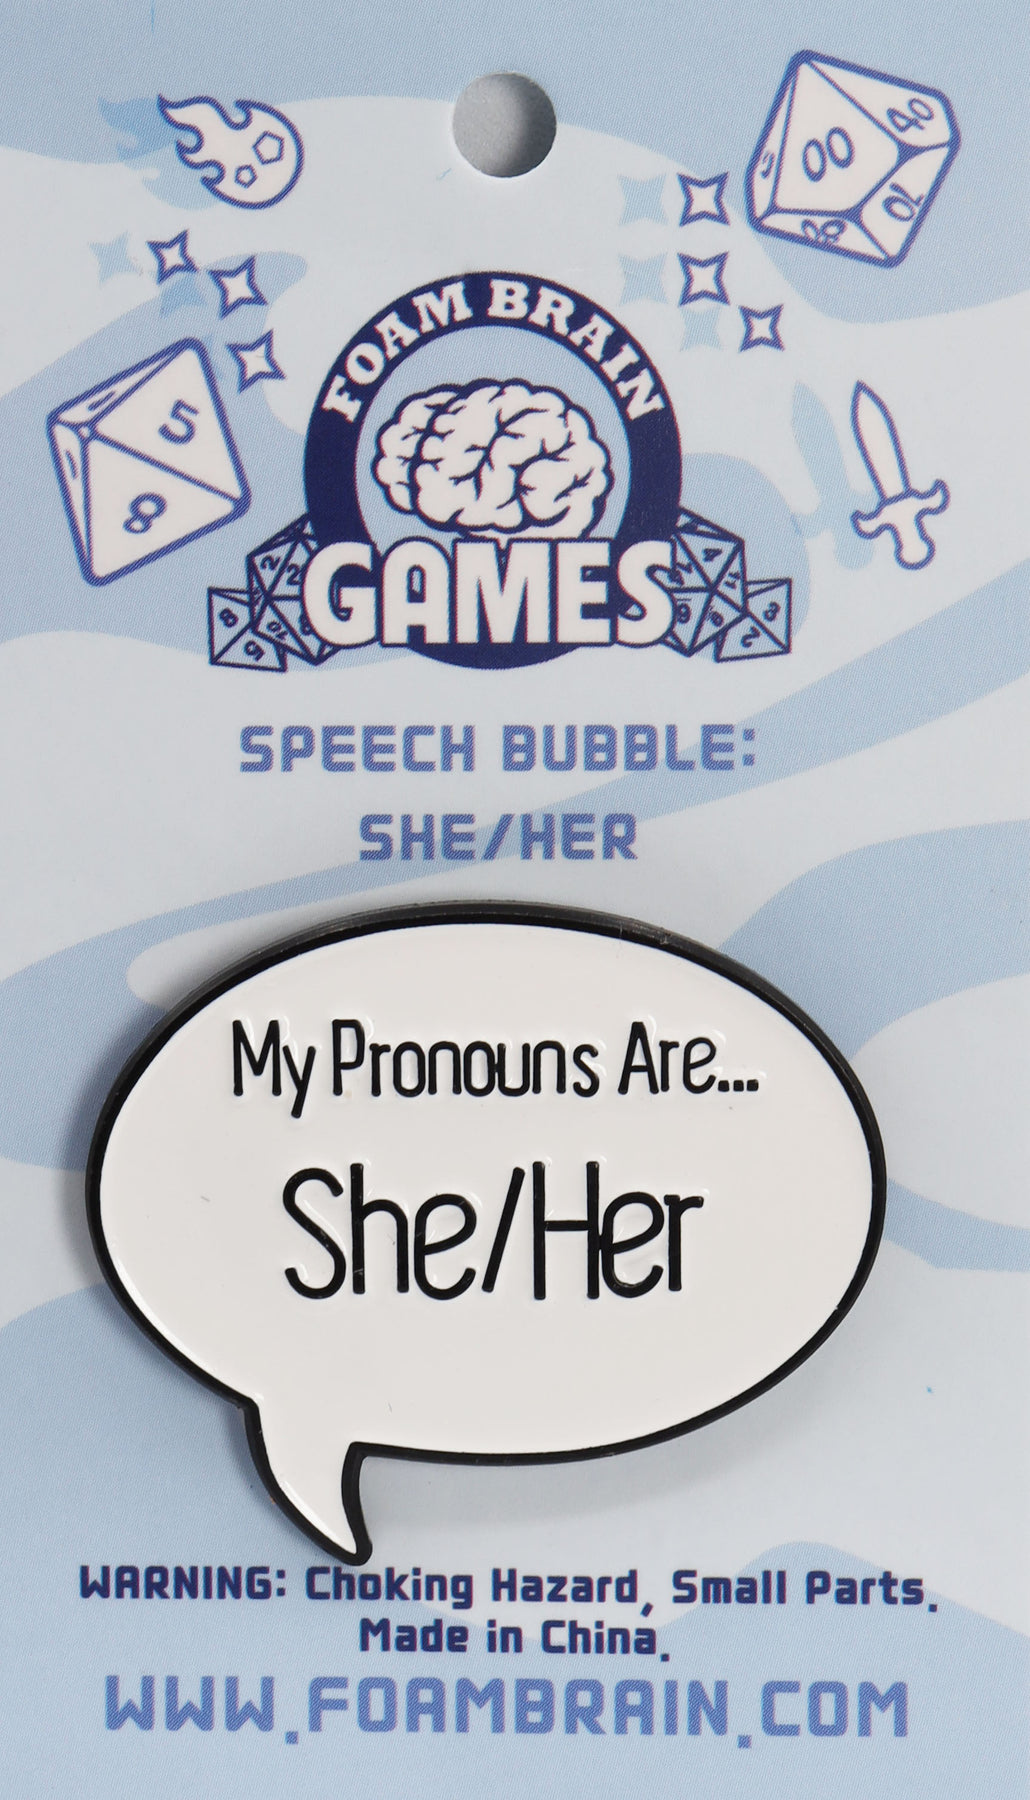 Foam Brain Games - Pronoun Speech Bubble Pins - Bards & Cards